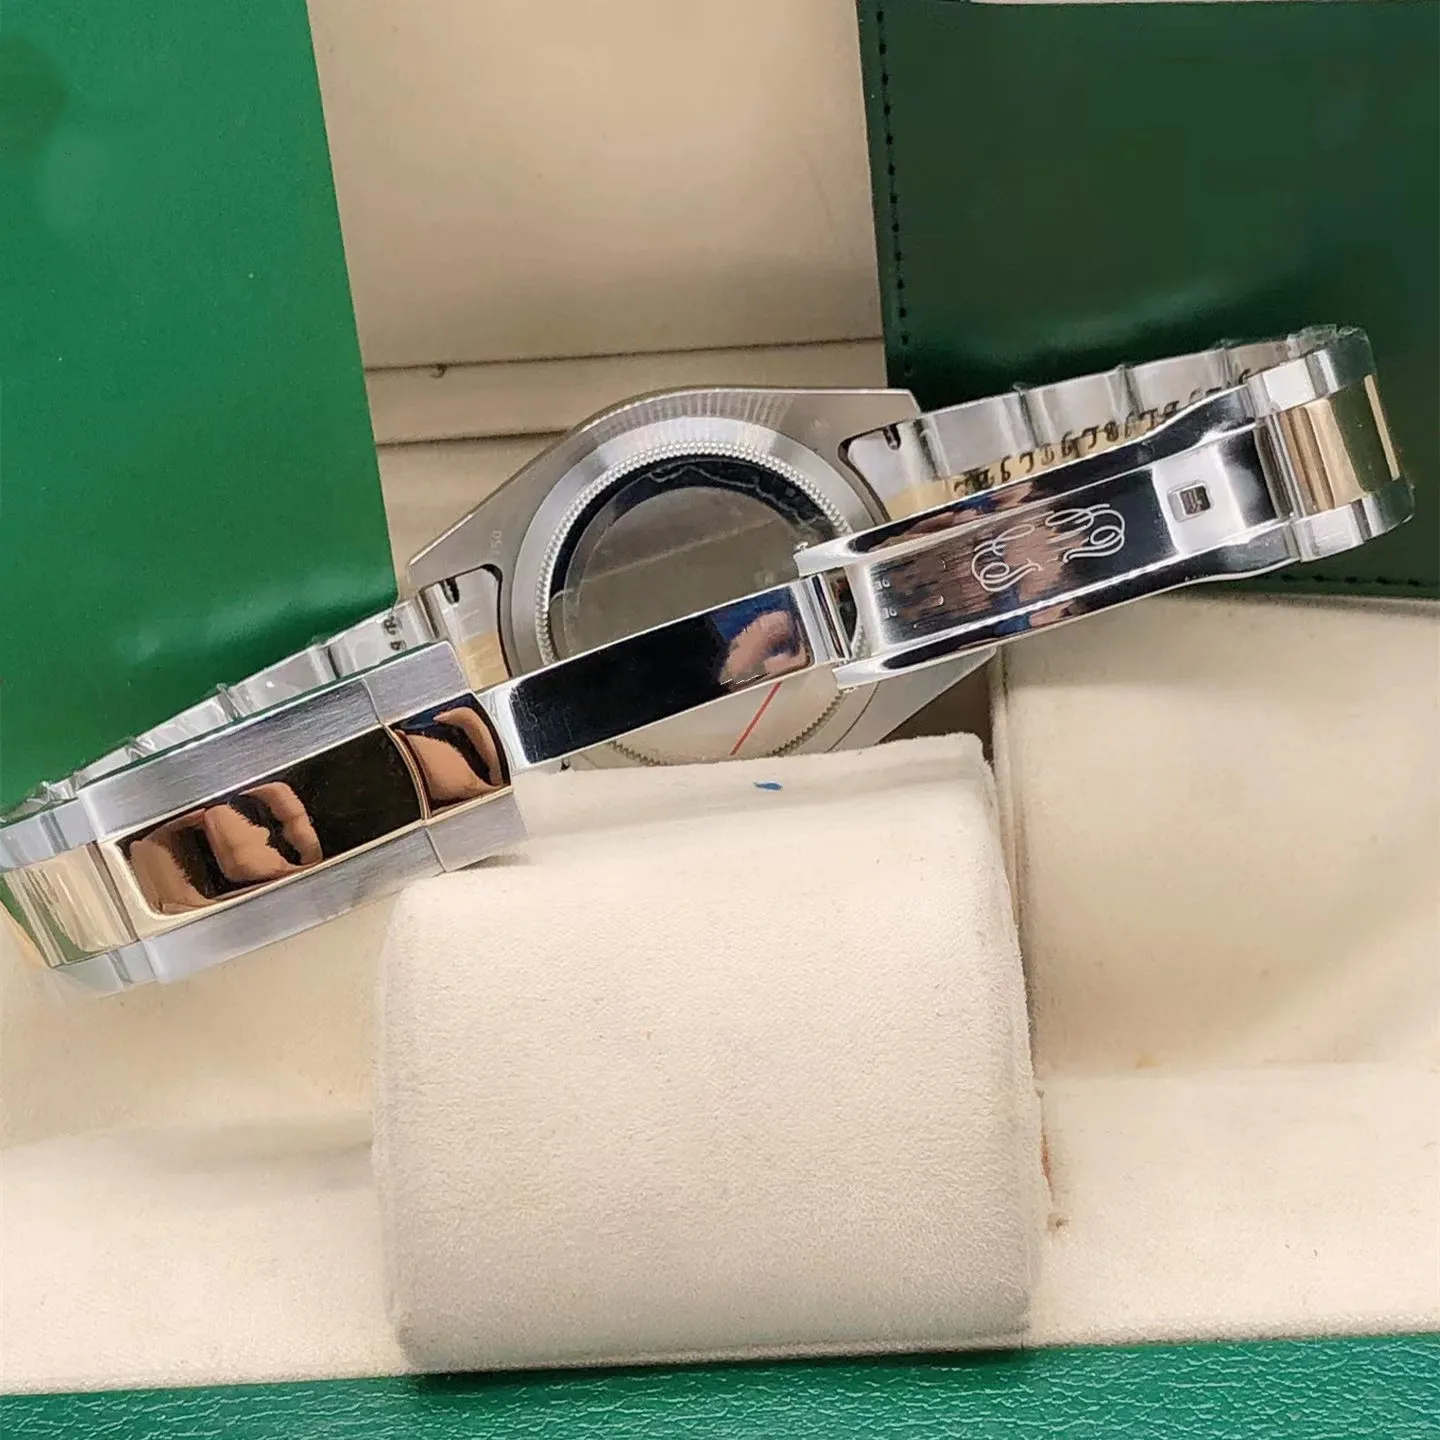 Luxury designer classic fashion automatic mechanical watch size 42mm Ceramic ring sapphire glass waterproof function